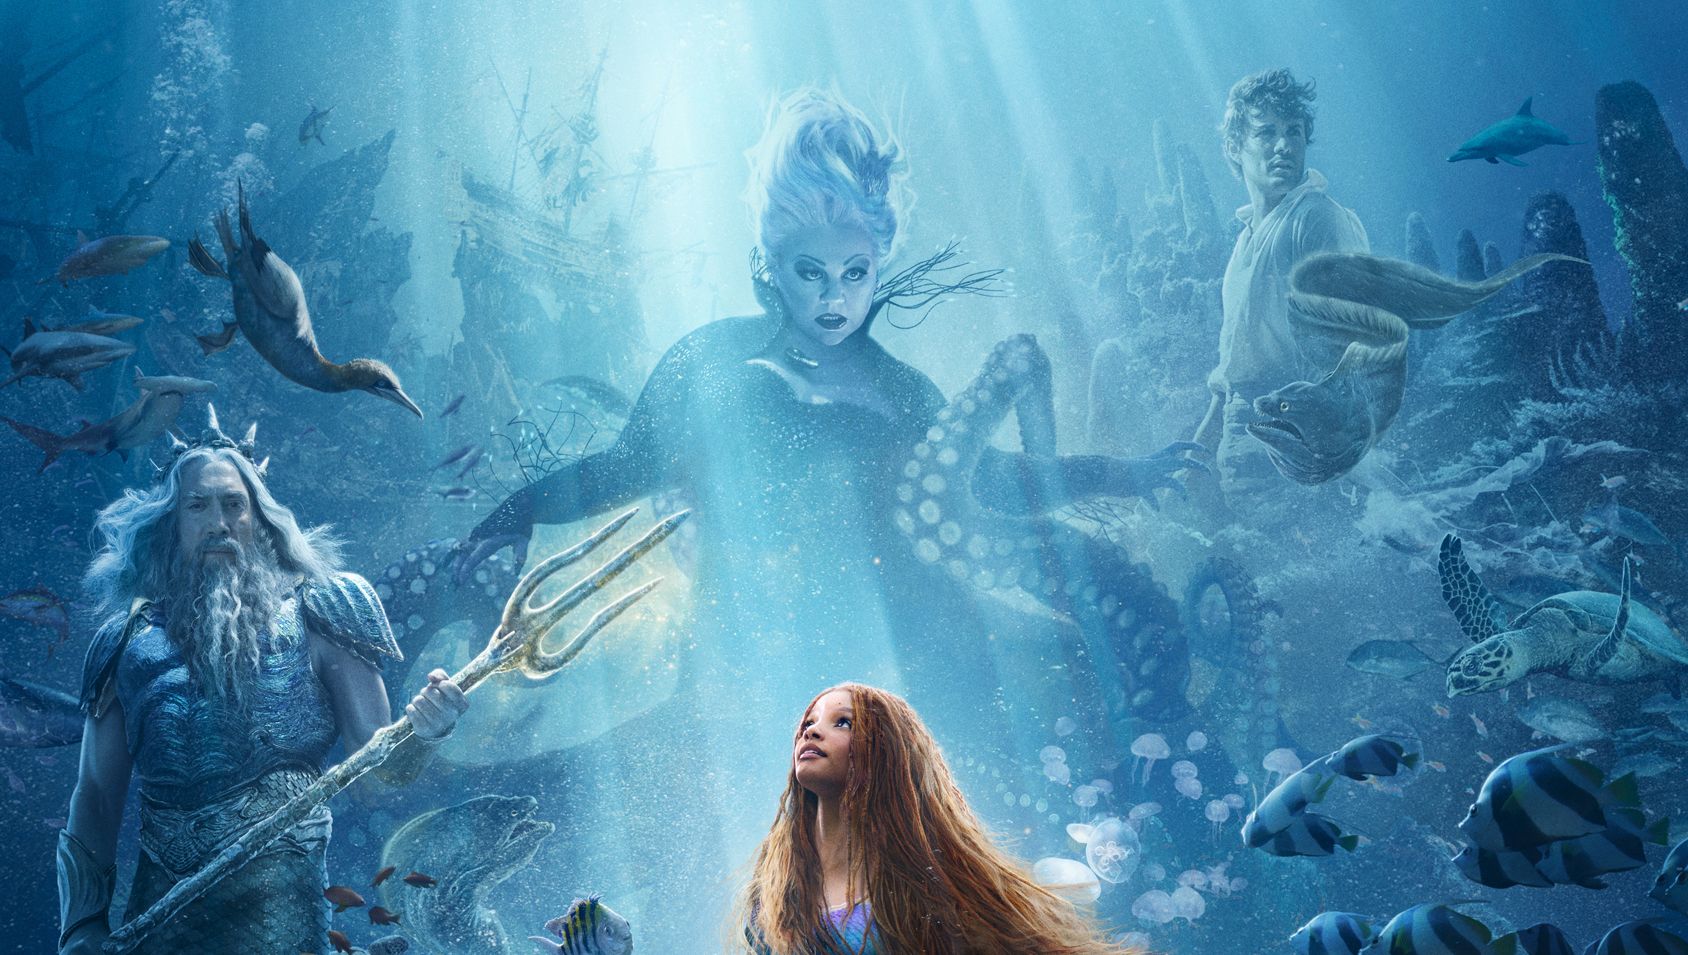 the little mermaid dvd 2022